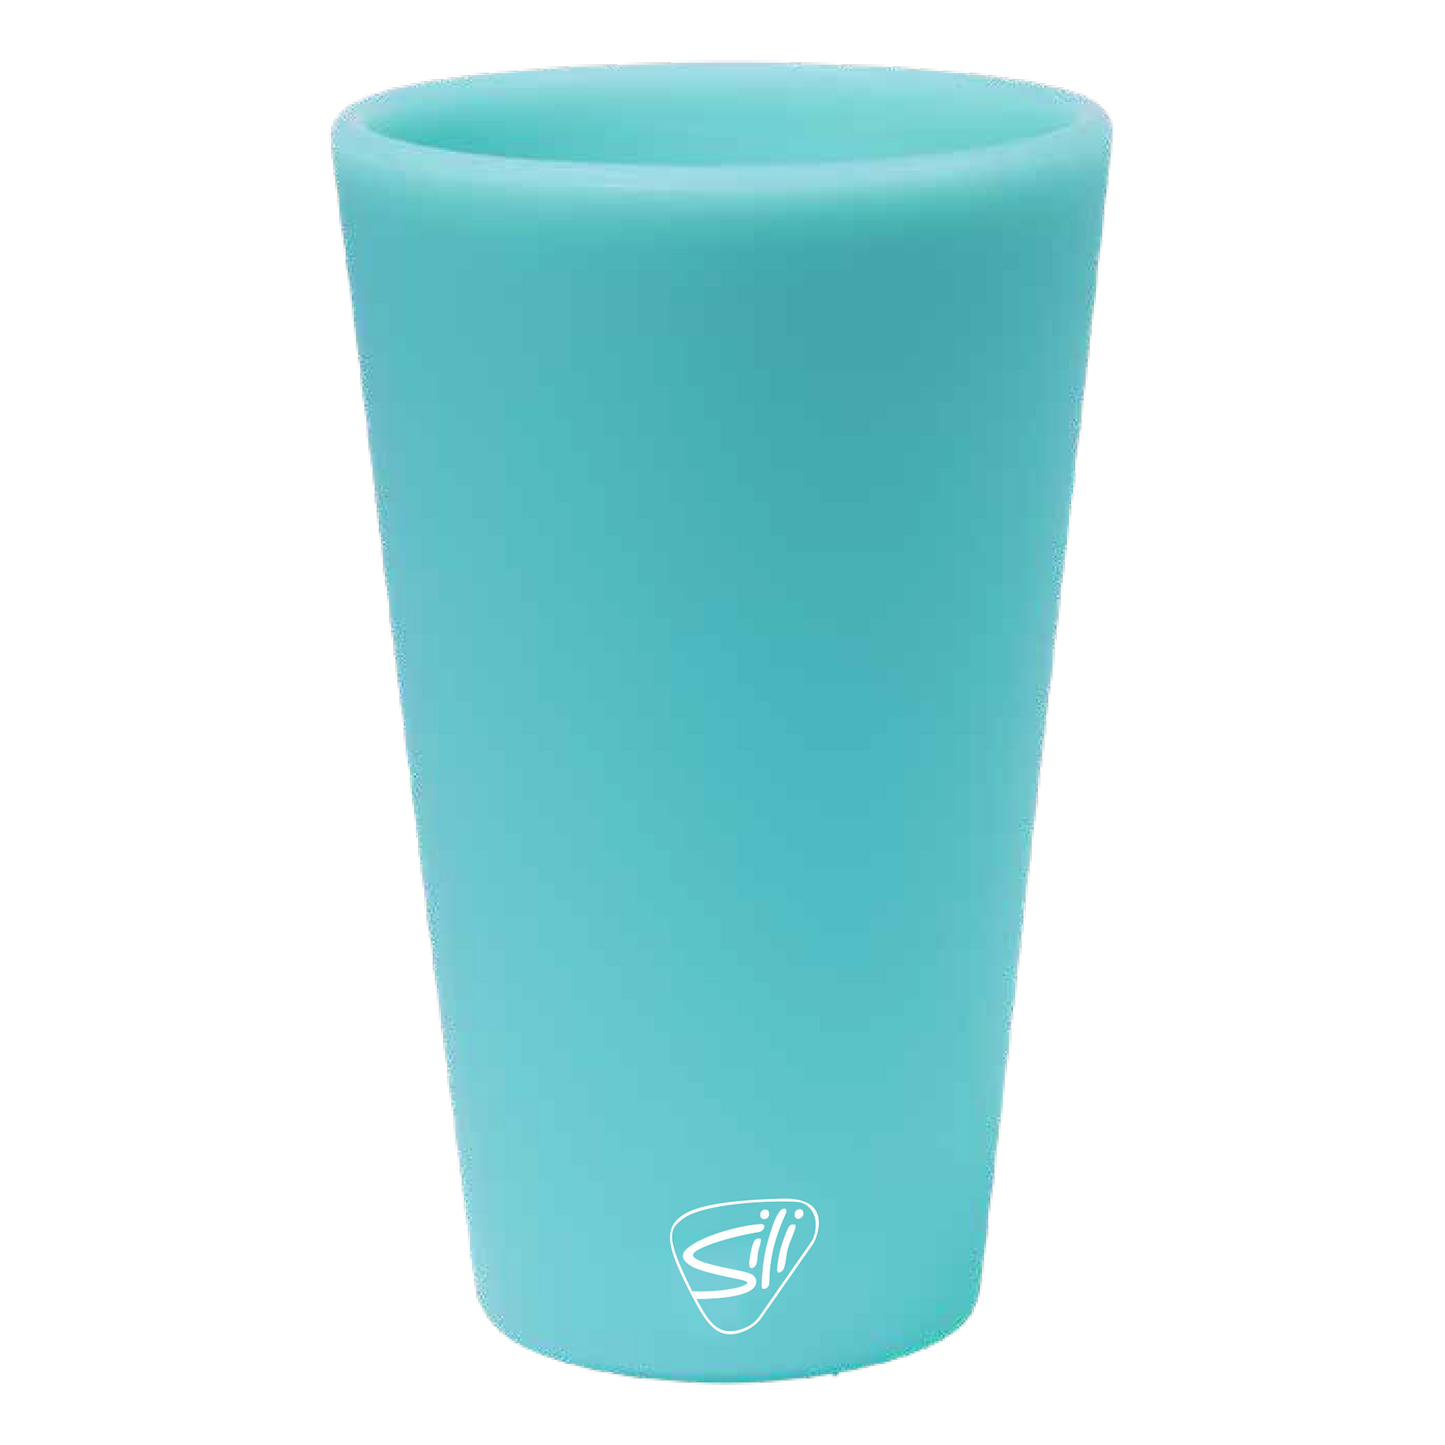 16oz Silipint Pint Glass - Aqua Blue